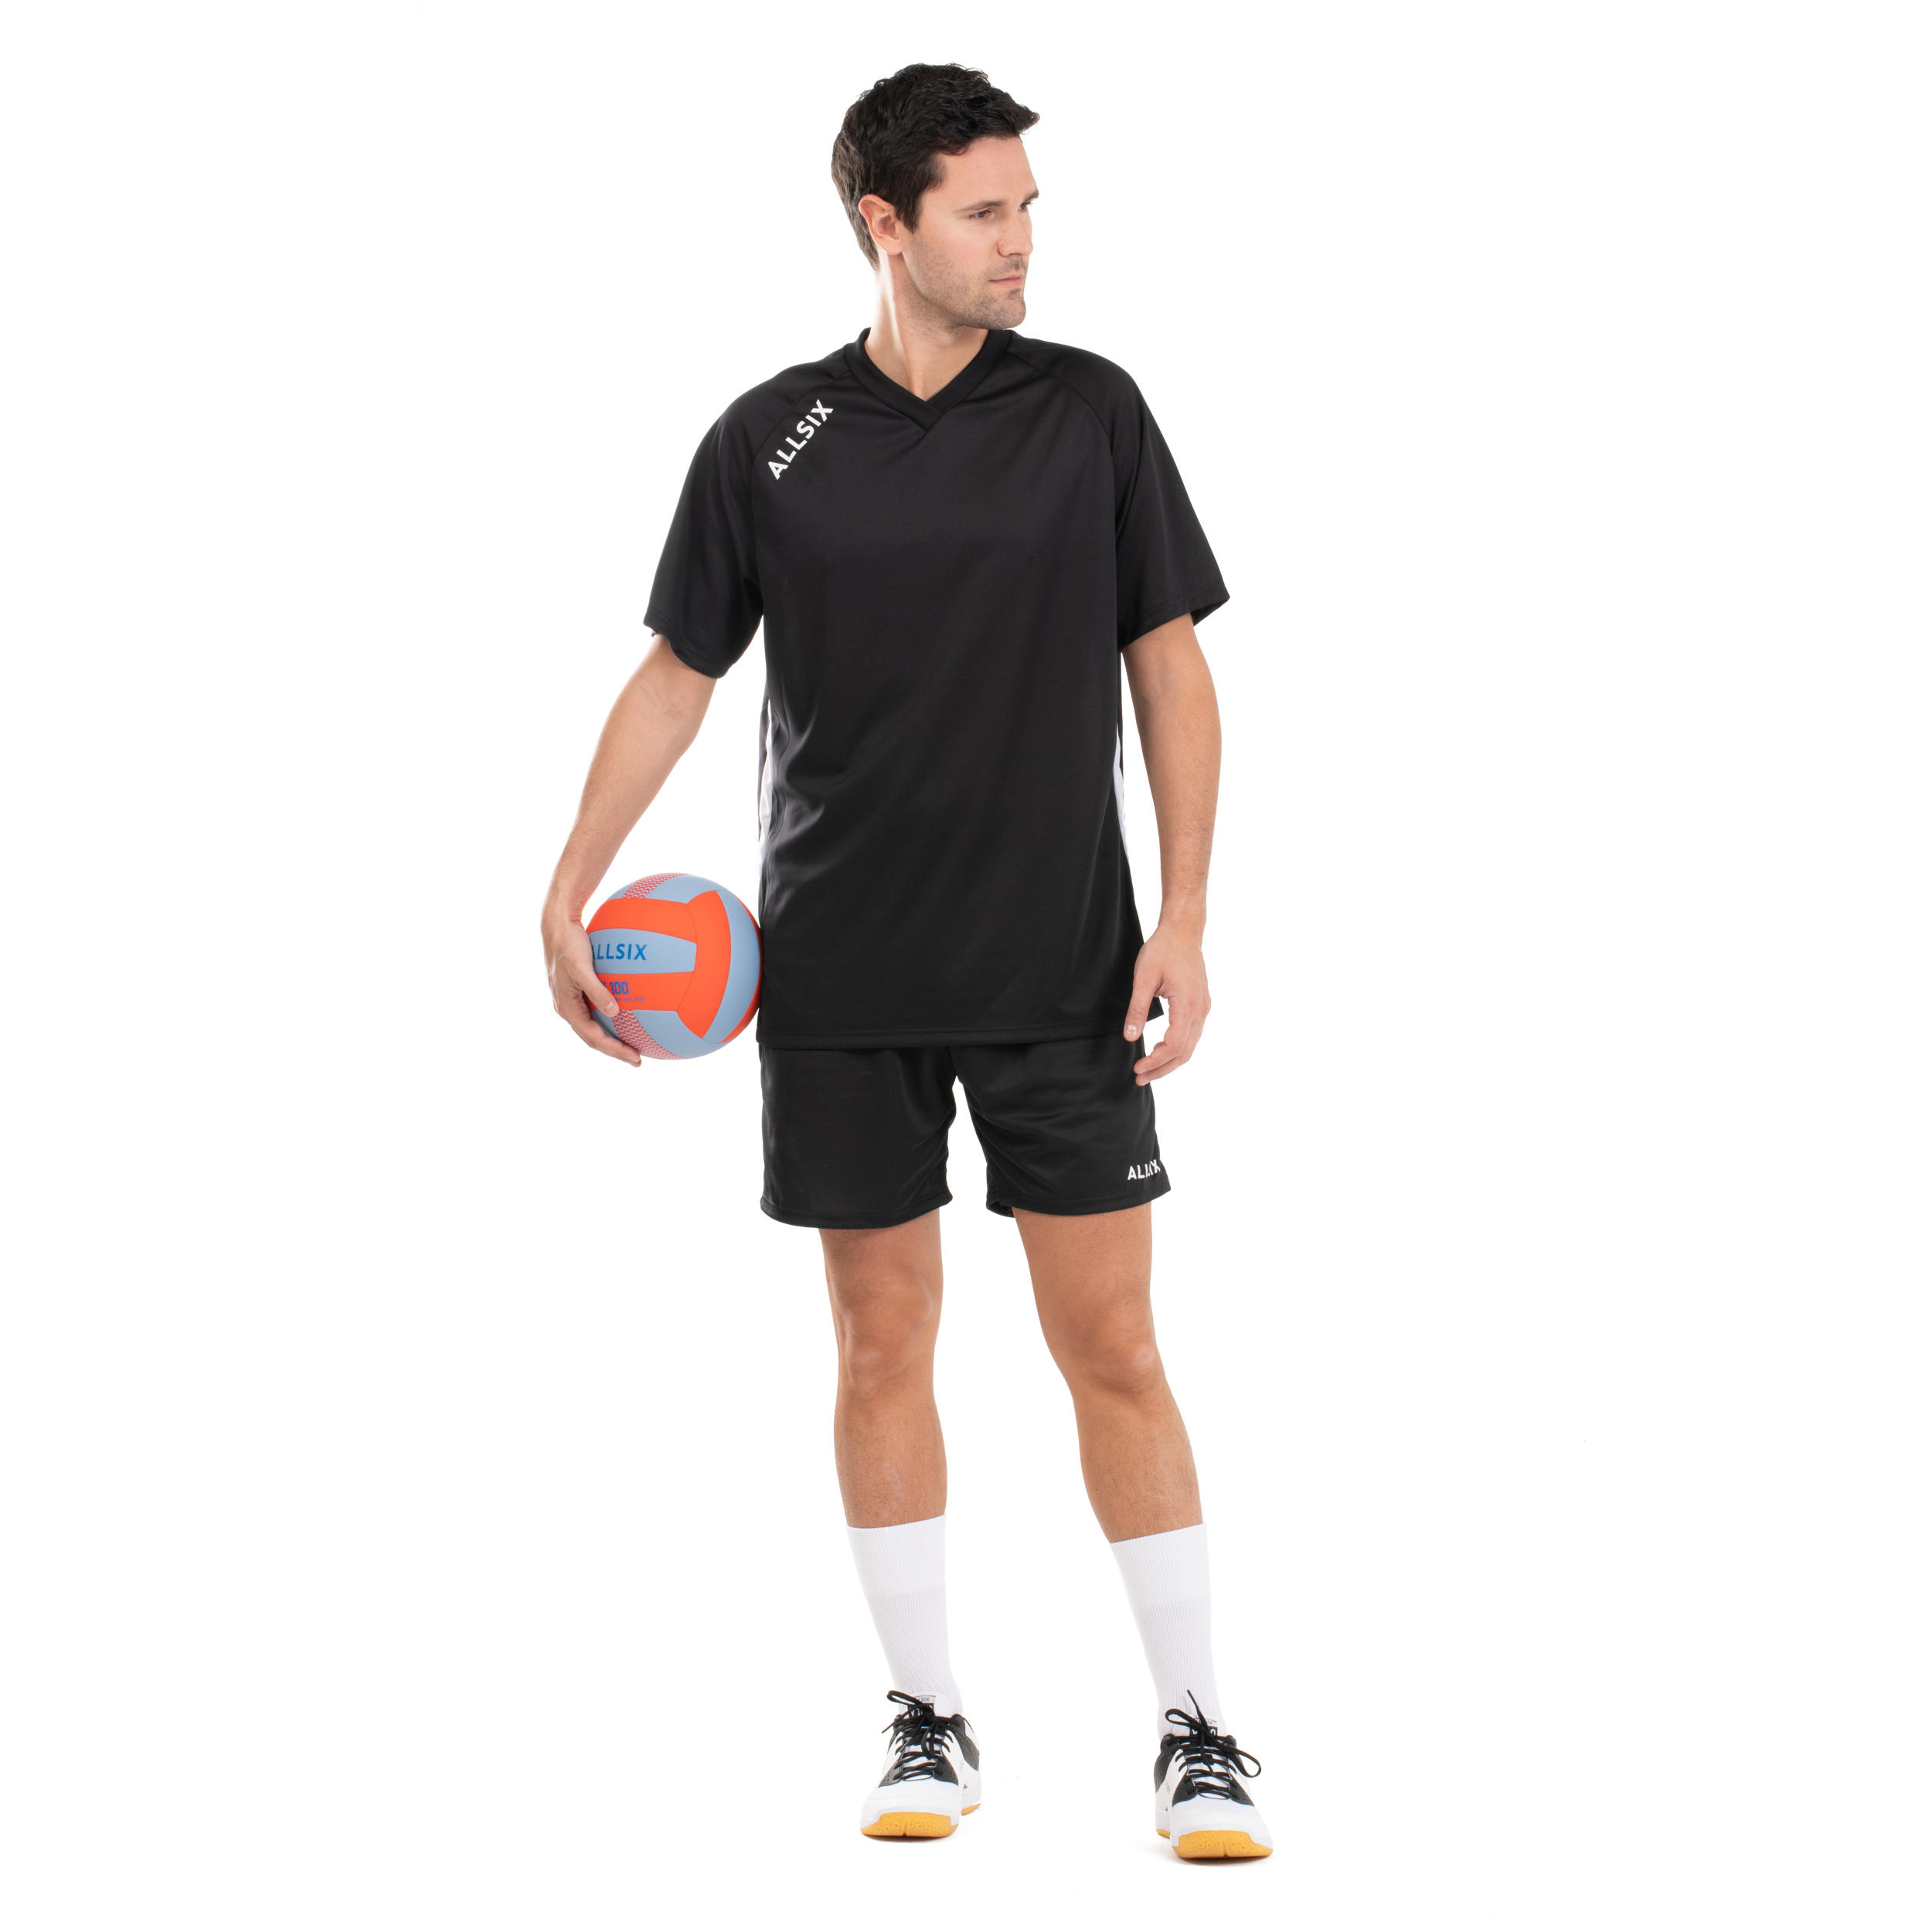 V100 Volleyball Jersey - Black 7/7